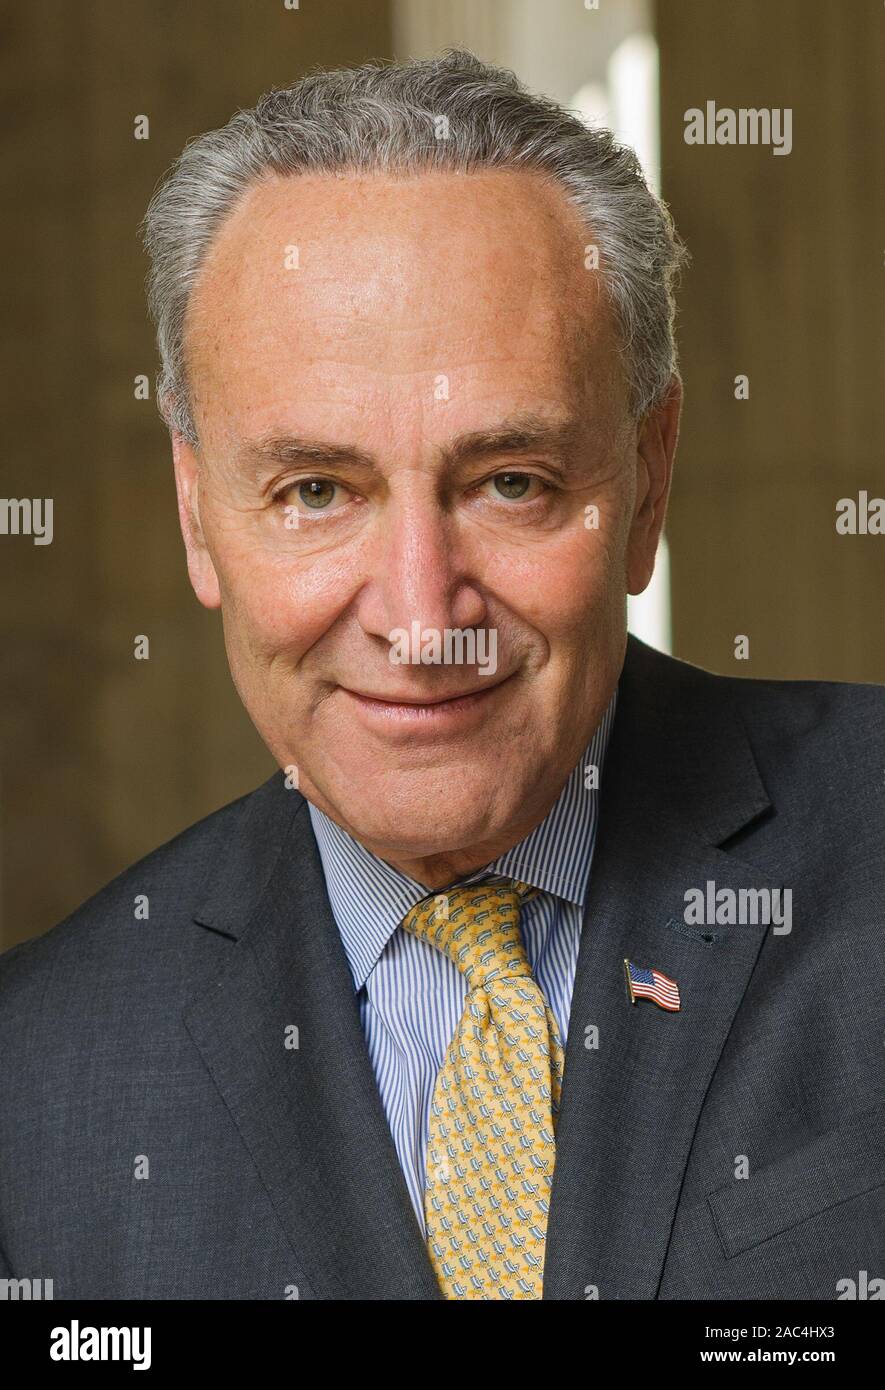 U.S. Senator Chuck Schumer, Democrat, New York Stock Photo